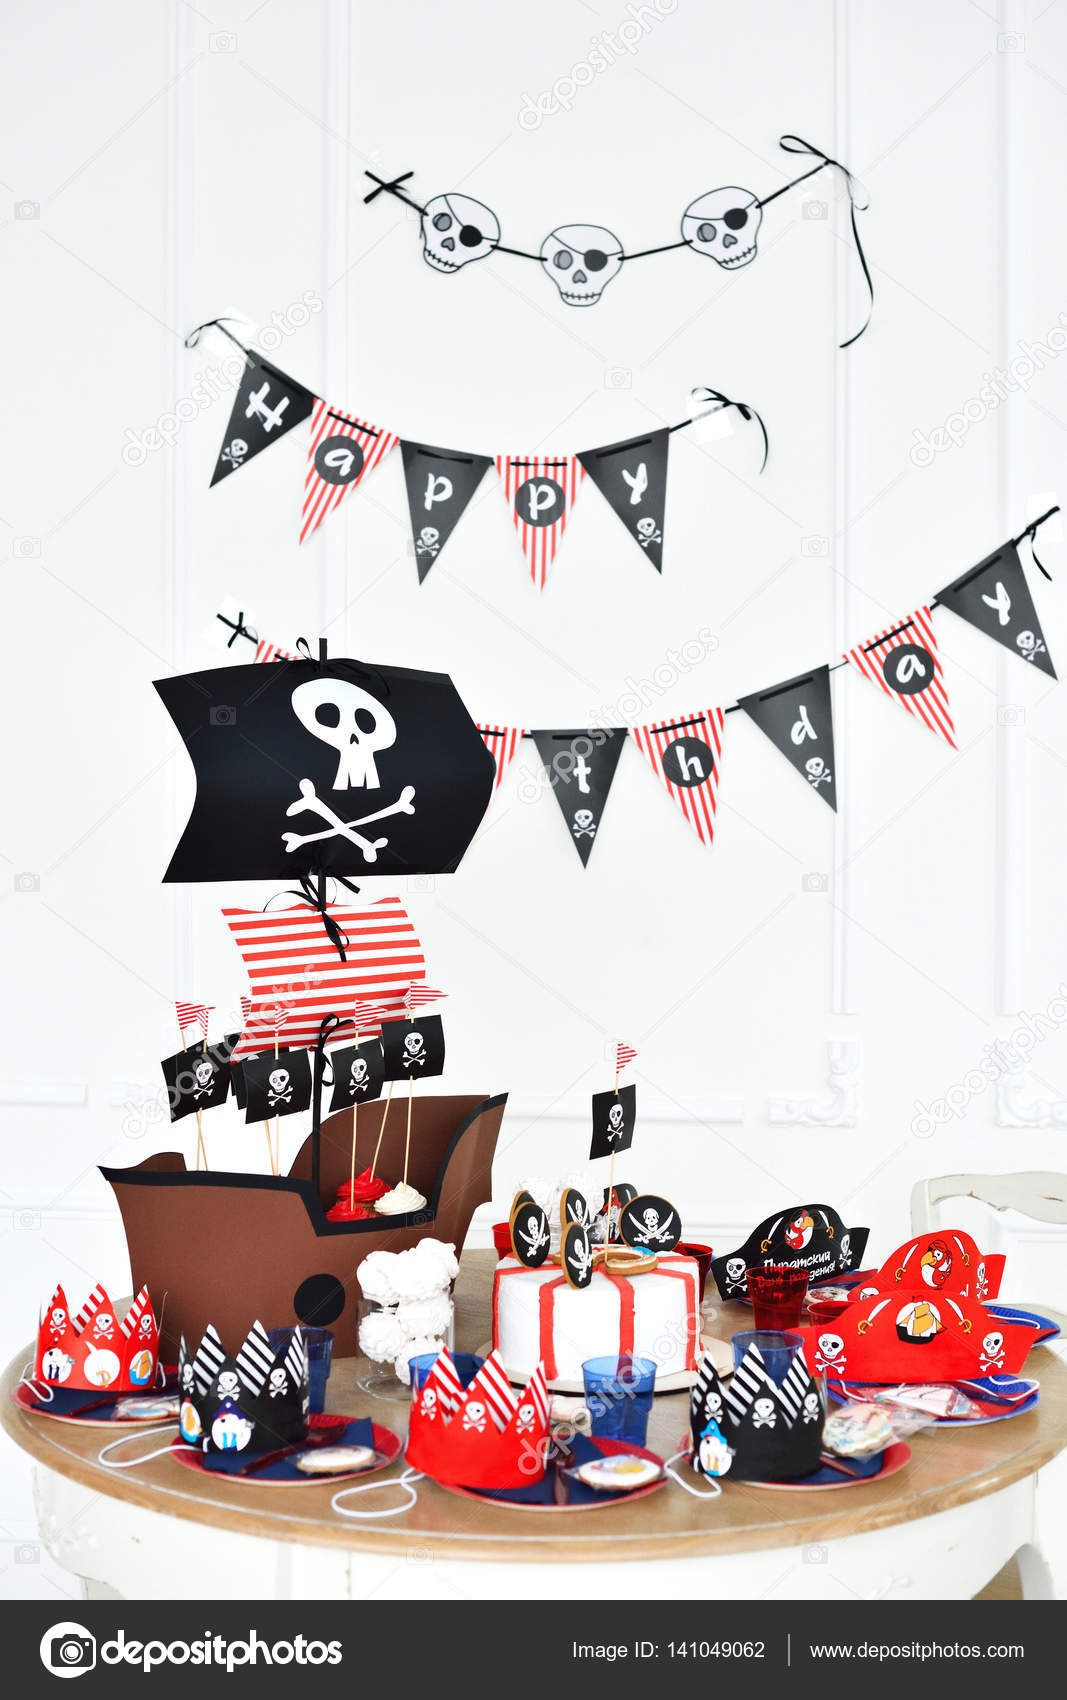 https://st3.depositphotos.com/4796109/14104/i/1600/depositphotos_141049062-stock-photo-pirate-party-decorations-for-birthday.jpg